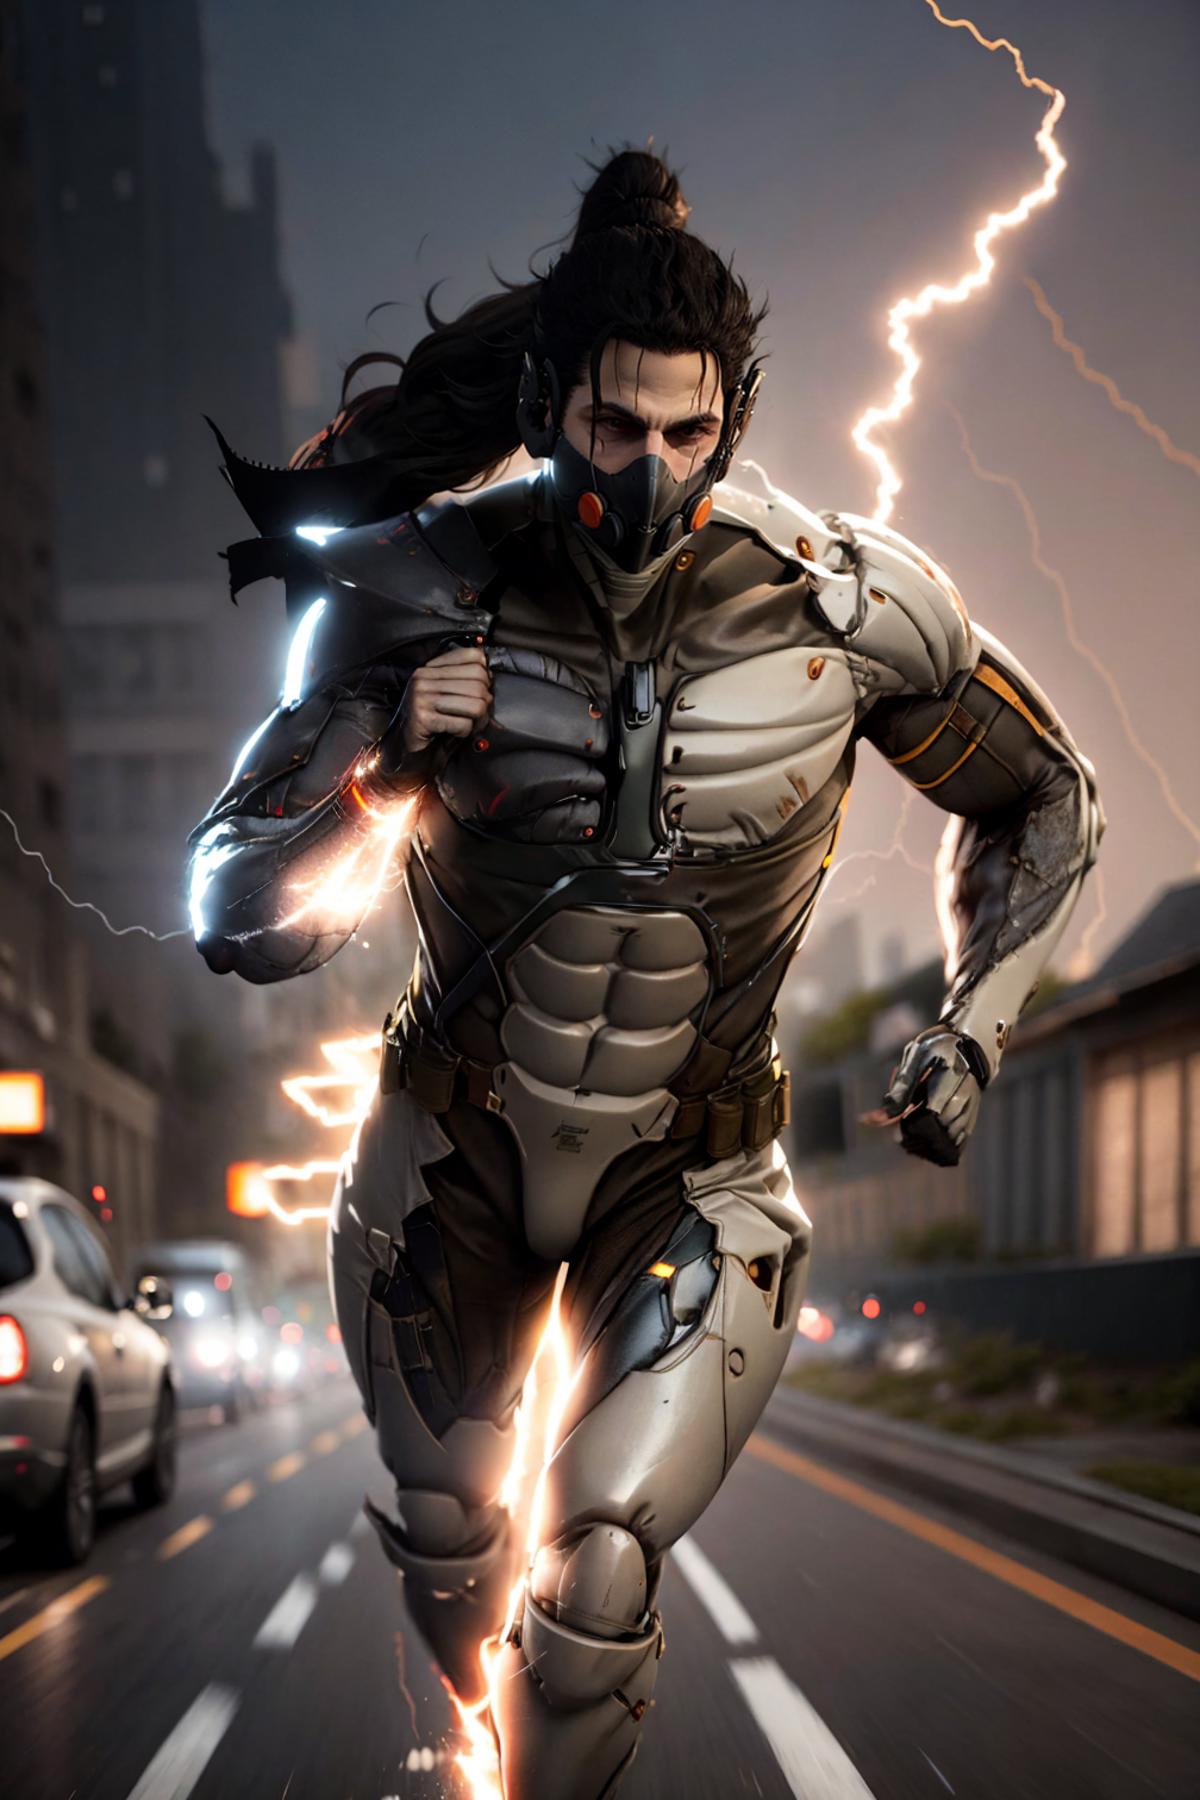 A futuristic cyborg running down a city street.